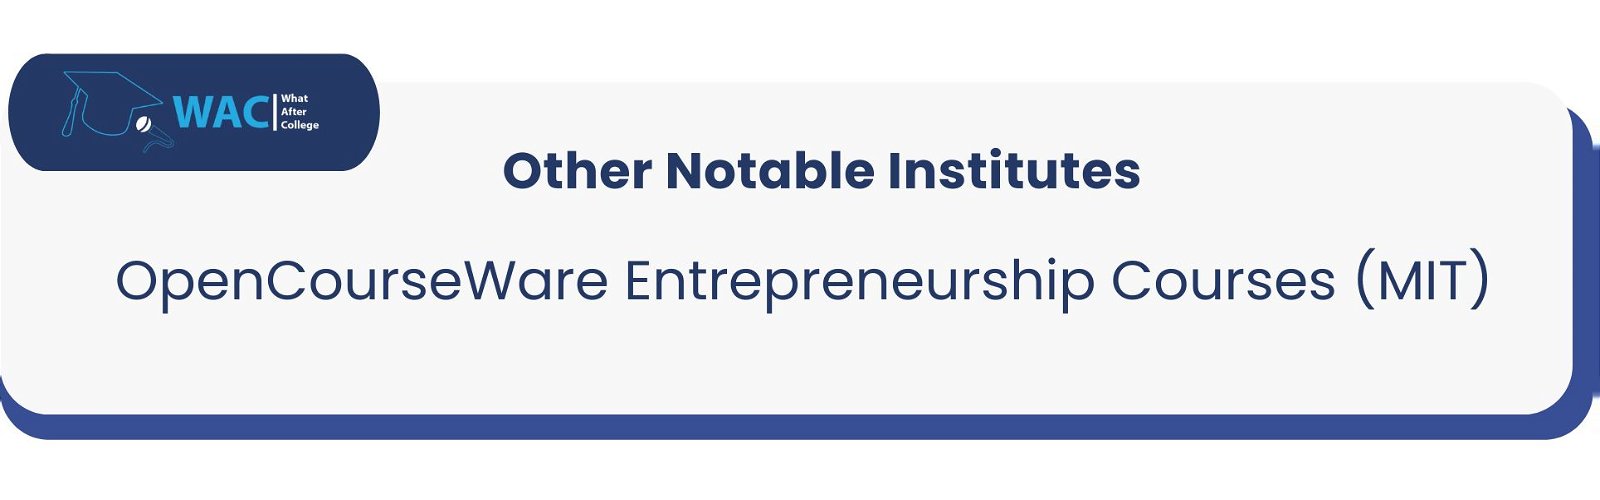 OpenCourseWare Entrepreneurship Courses (MIT)